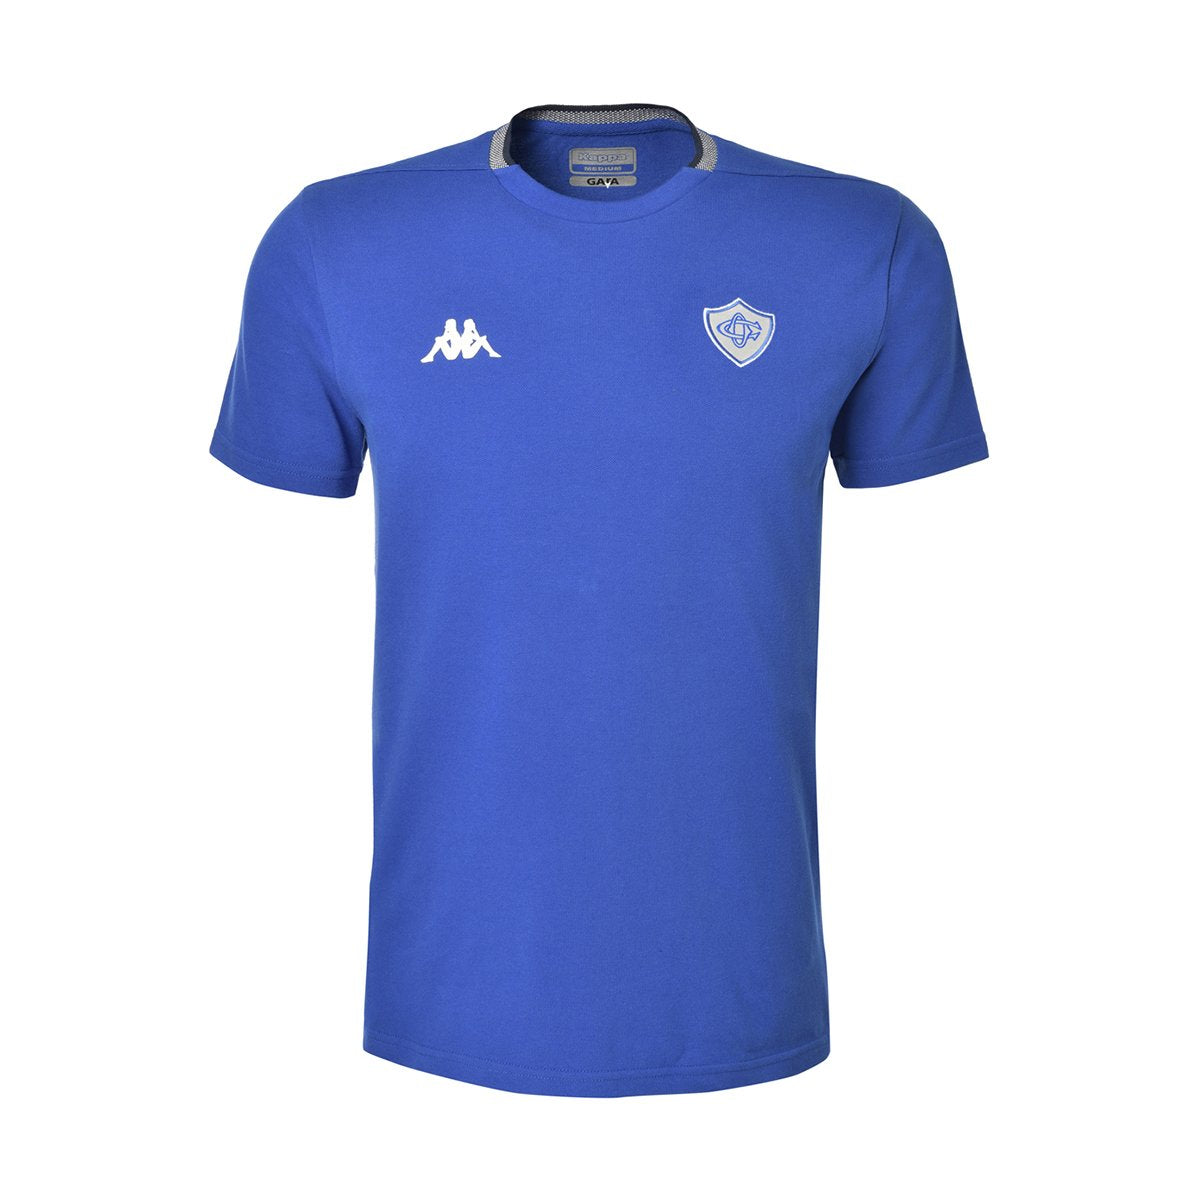 Camiseta Angelico Castres Olympique Azul Hombre - Imagen 1